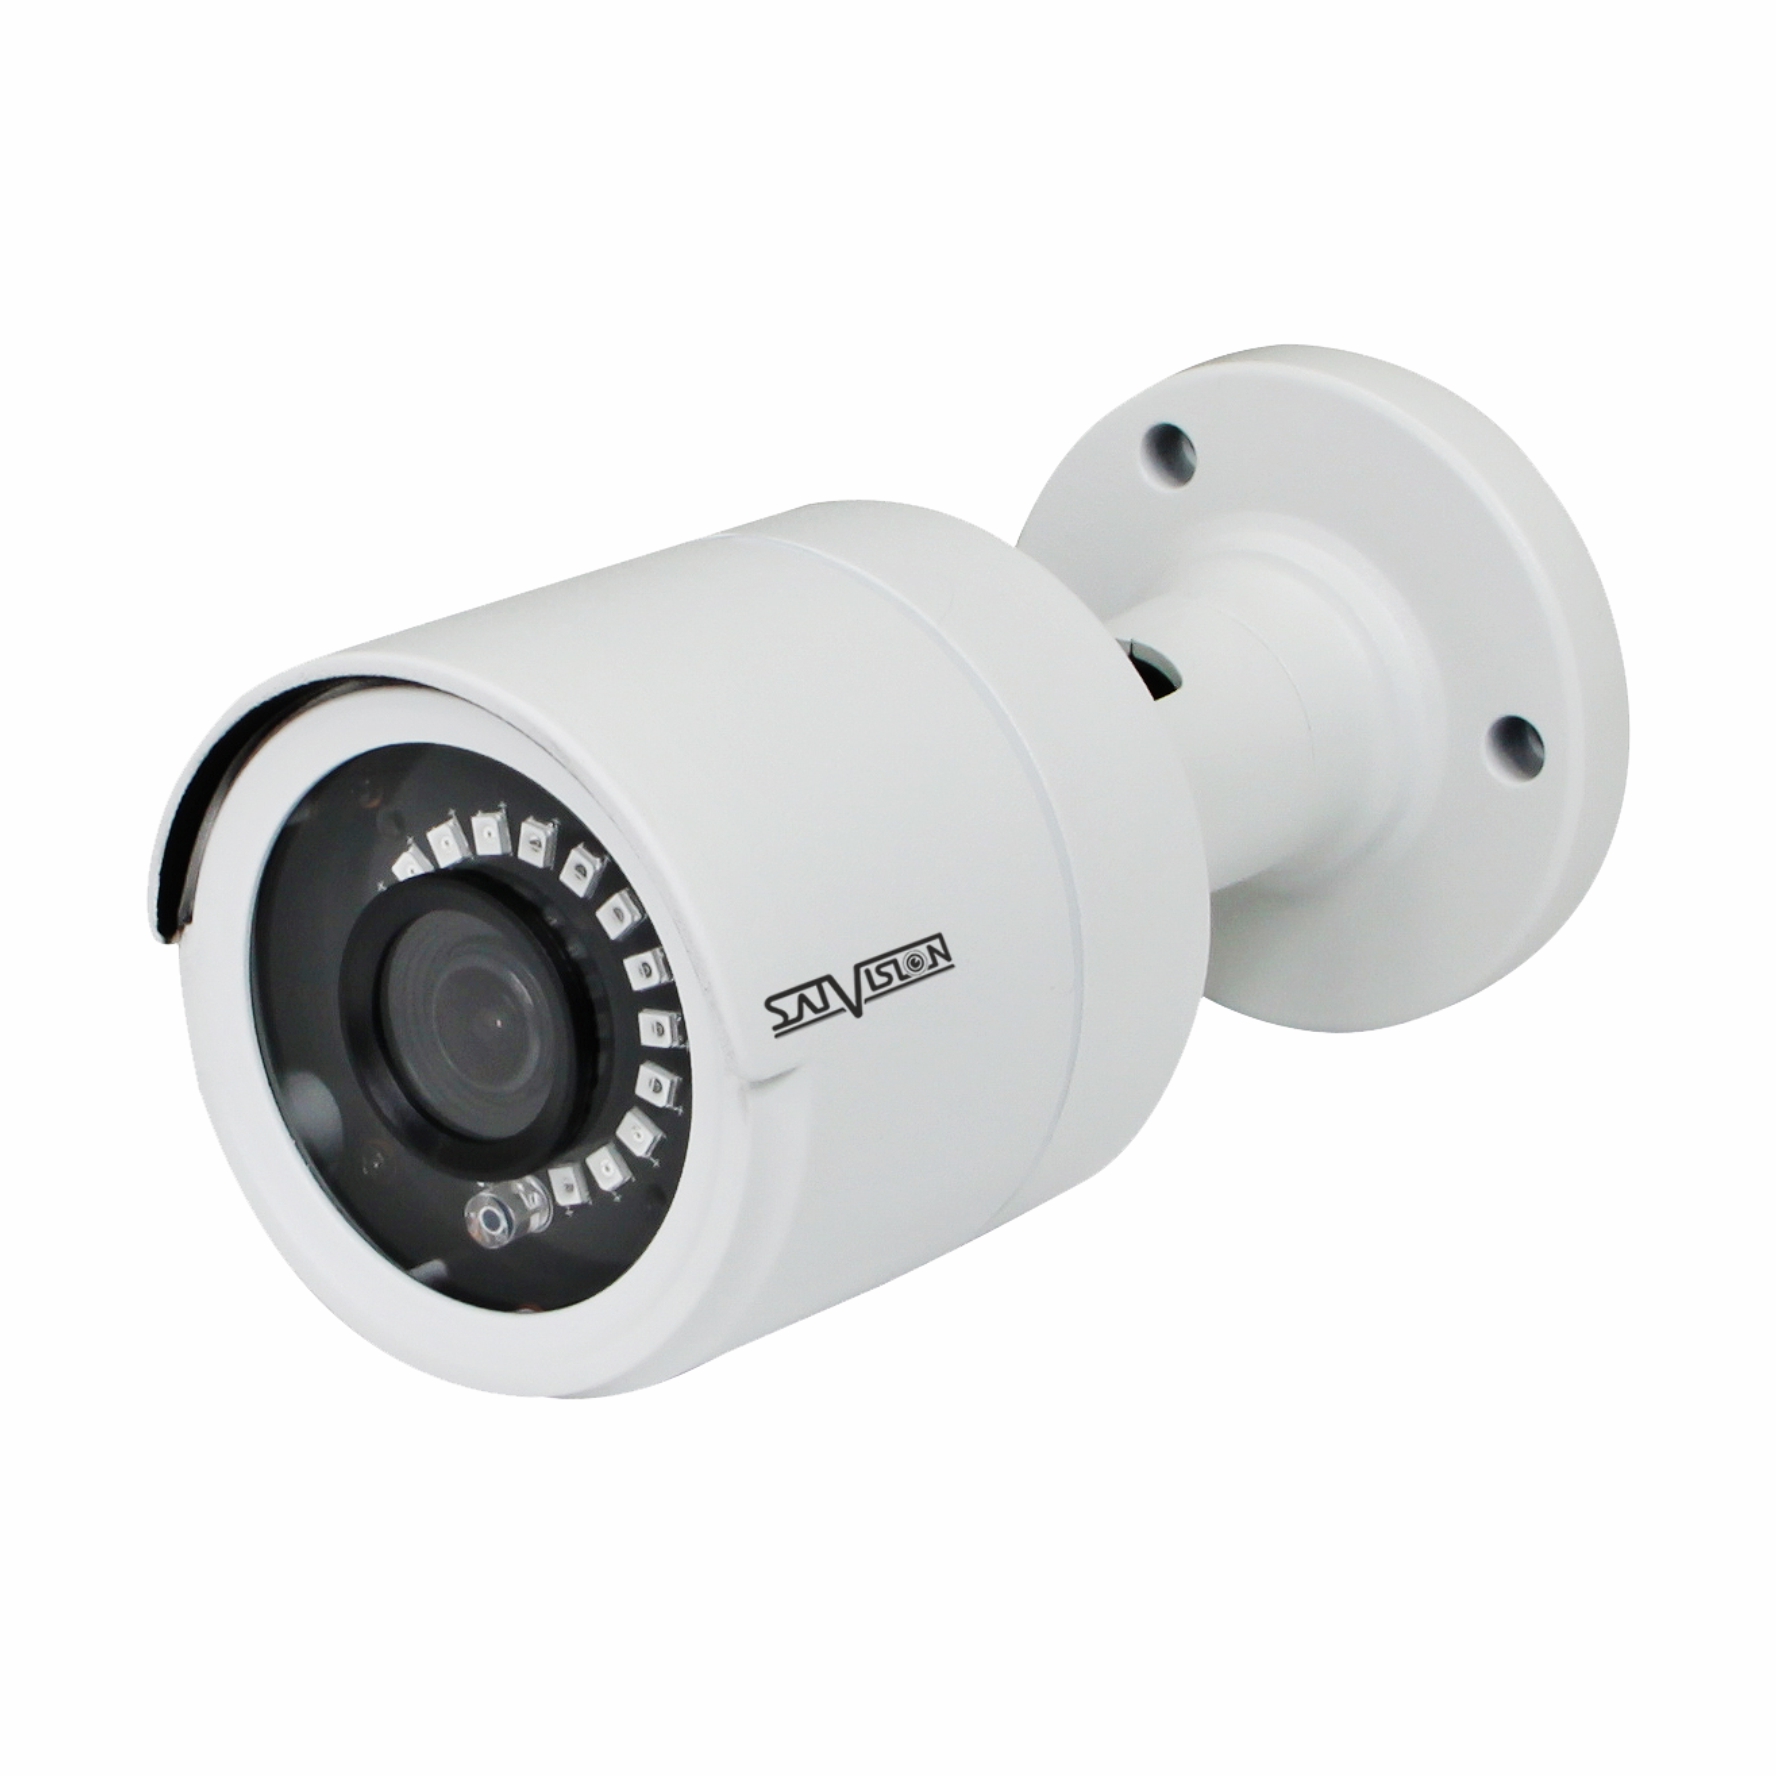 Ip видеокамера. IP-видеокамера Satvision svi-s123 (2mpix, 2.8мм). Svi-s143 IP видеокамера. Svi-s123 SD SL V2.0 2mpix 2.8mm видеокамера IP. Камера svi s123 SD.